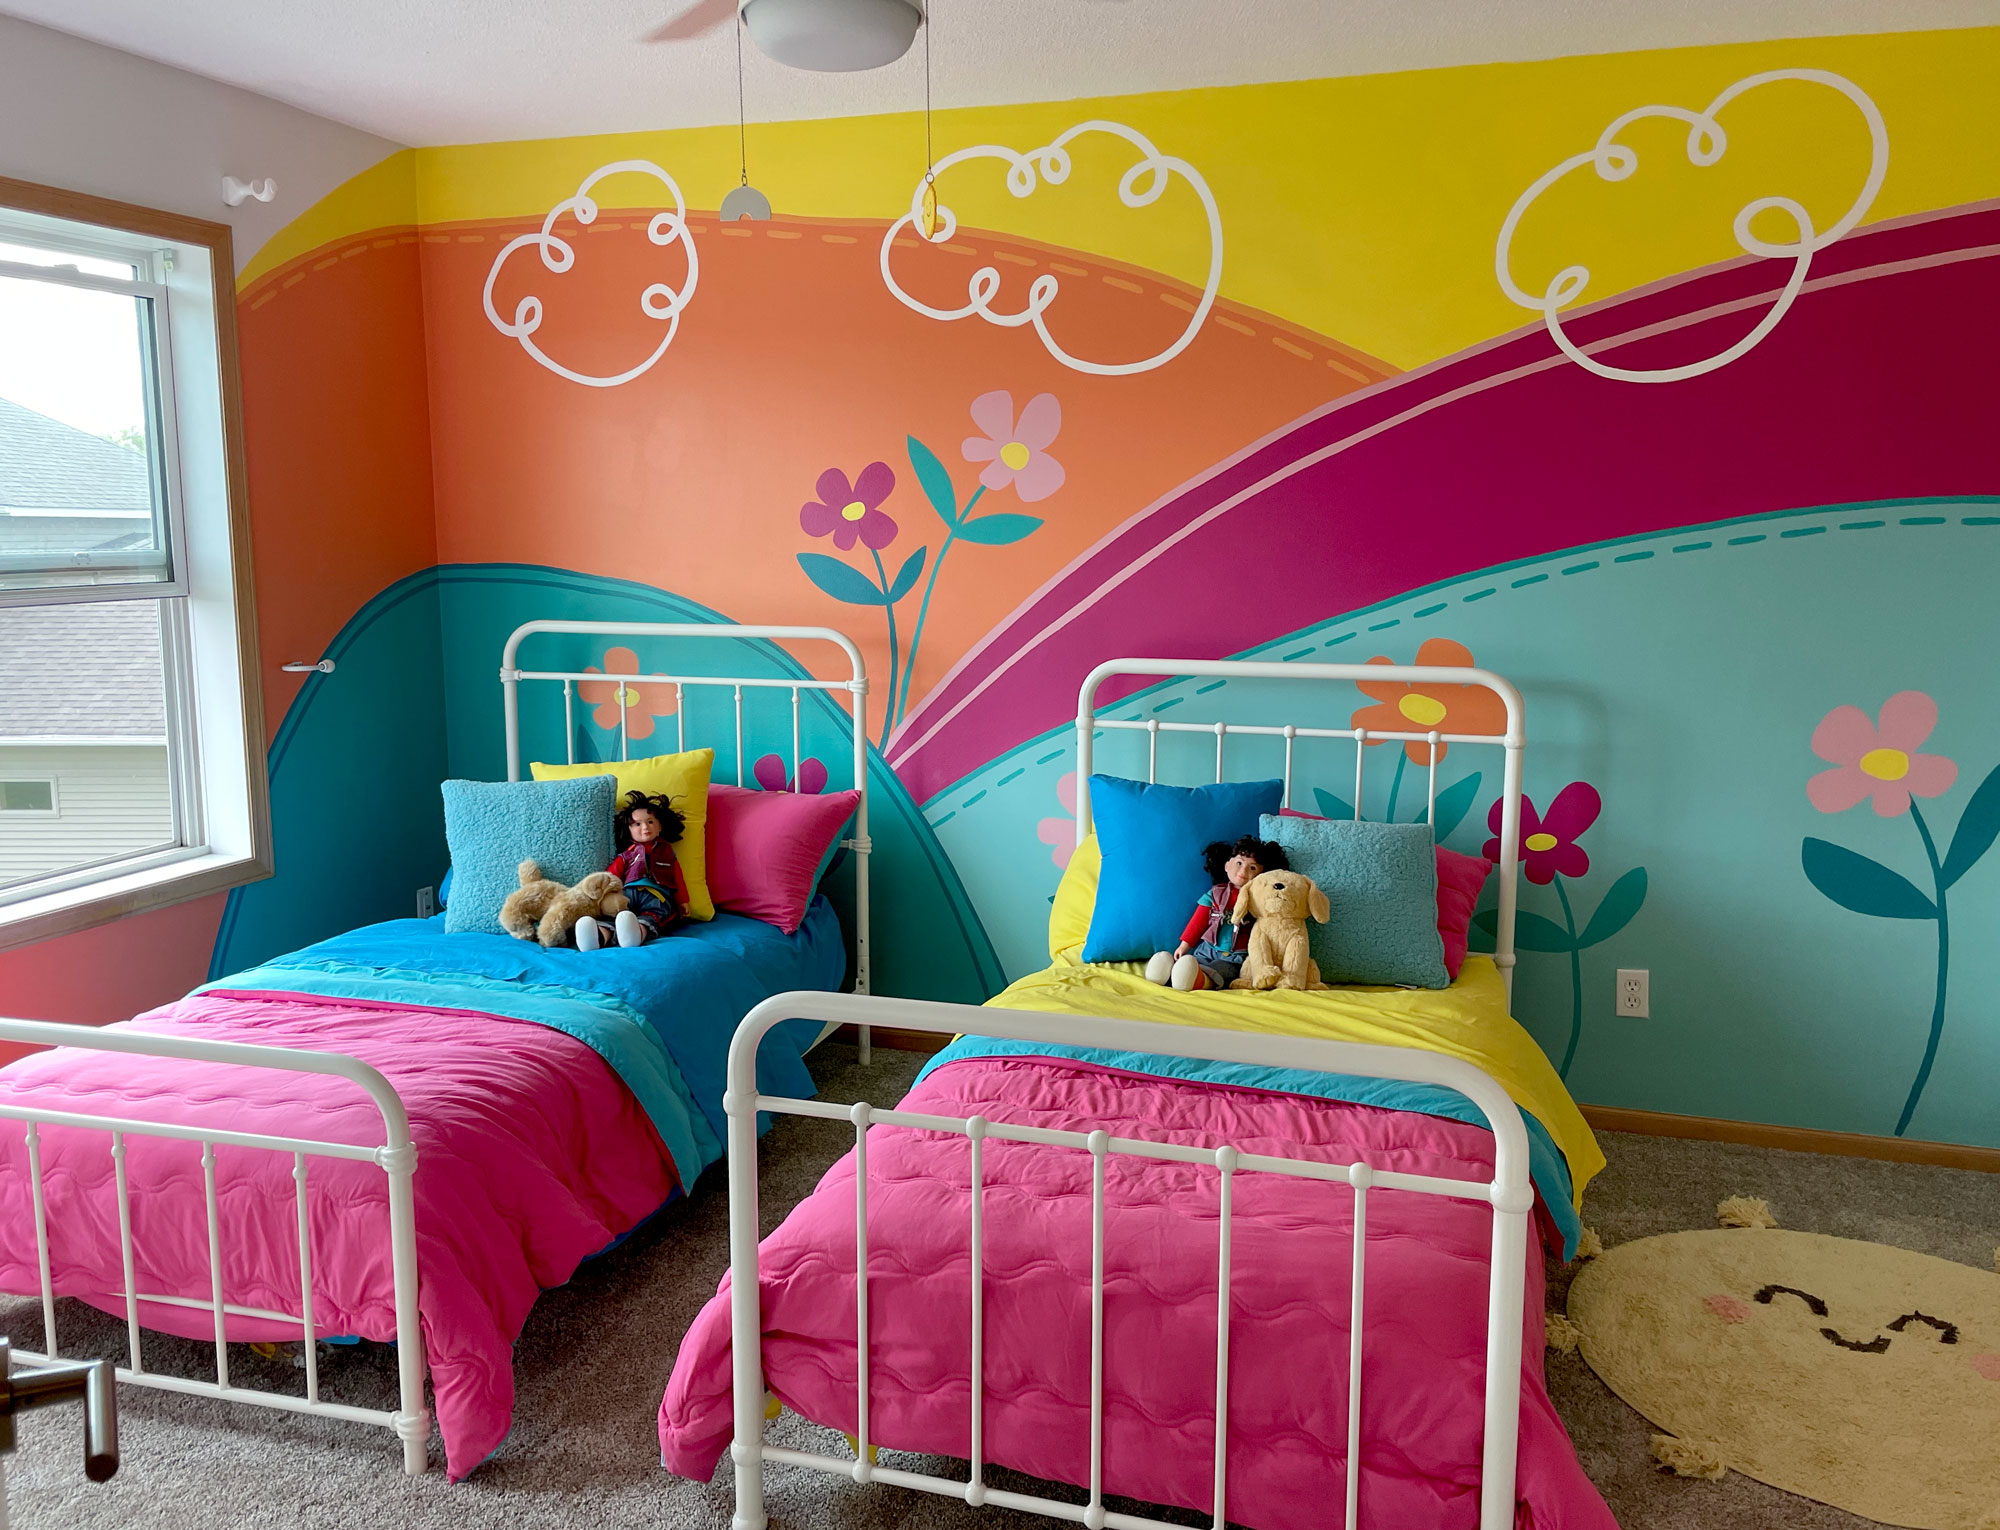 Punky Brewster kids room mural, Punky Brewster decor, Punky Brewster kids decor, Punky Brewster mural